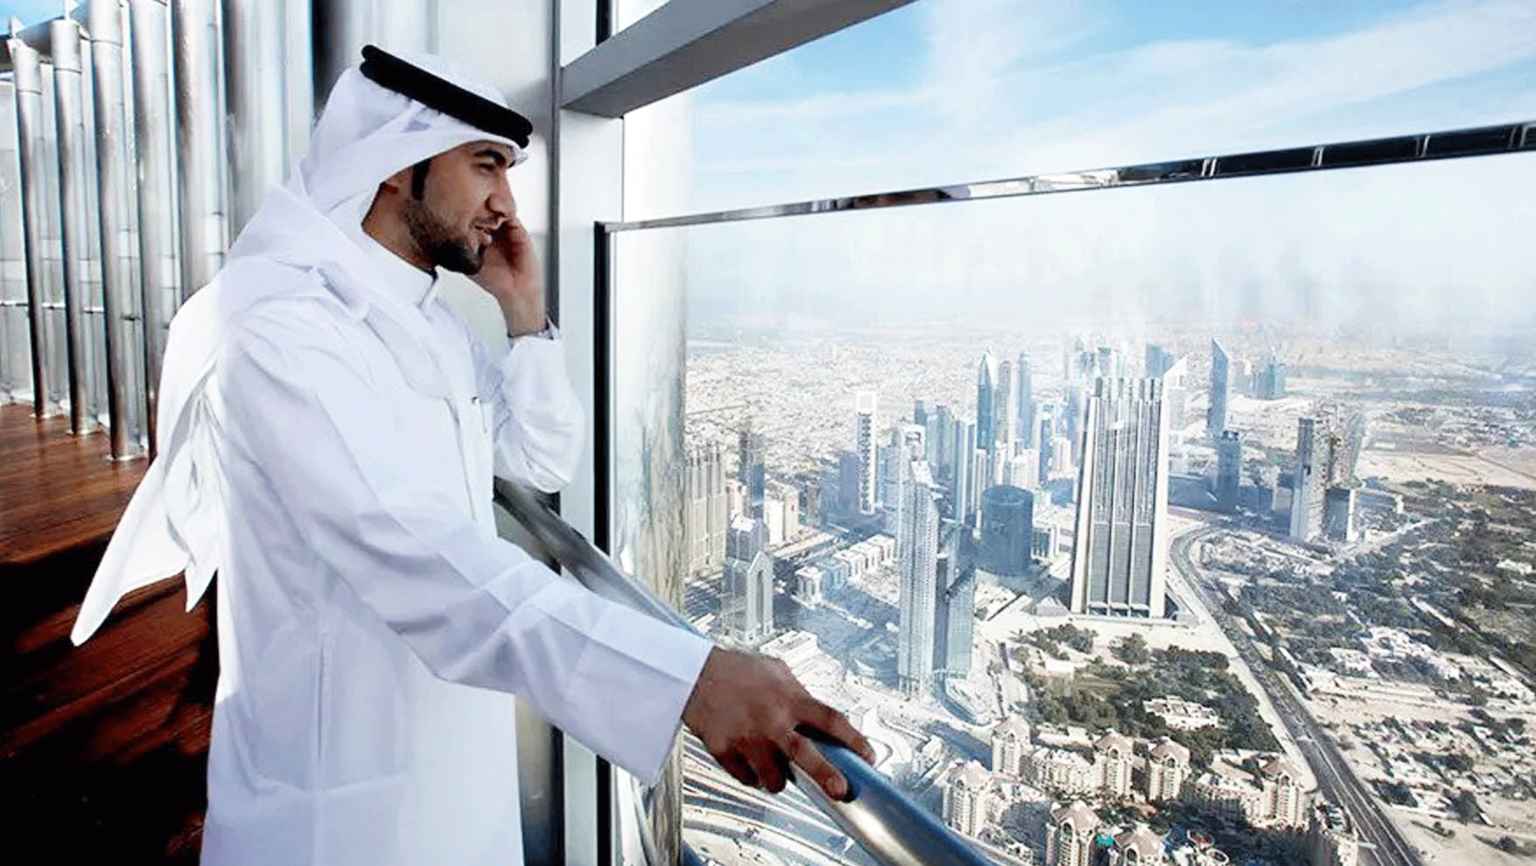 Properties for Sale in Dubai